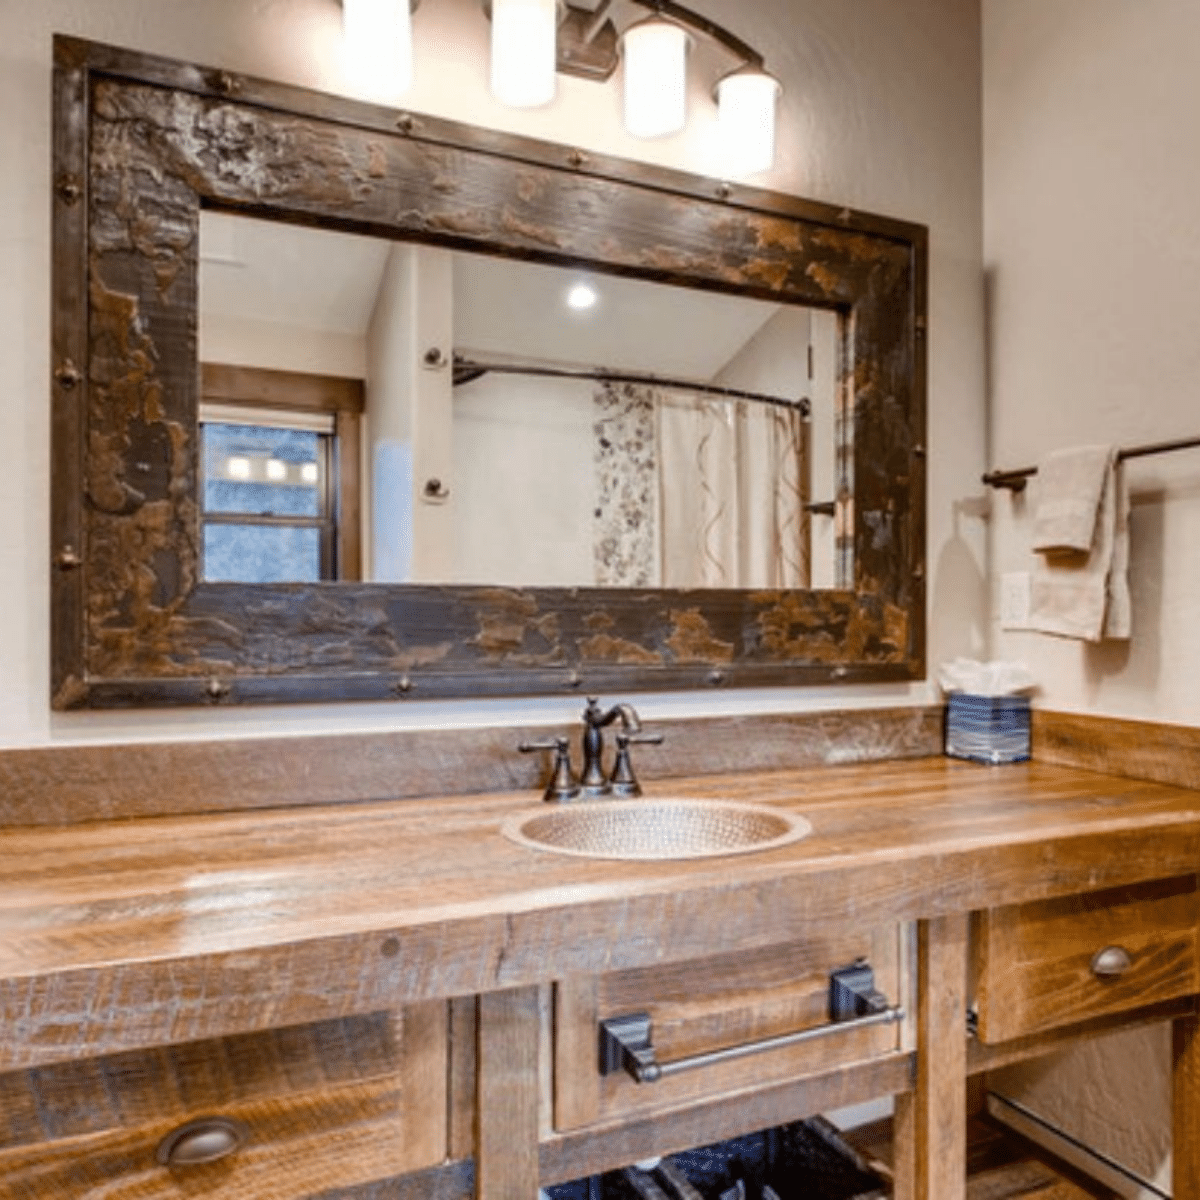 Rustic Birch Bathroom Accessories: Rustic Bath Decor